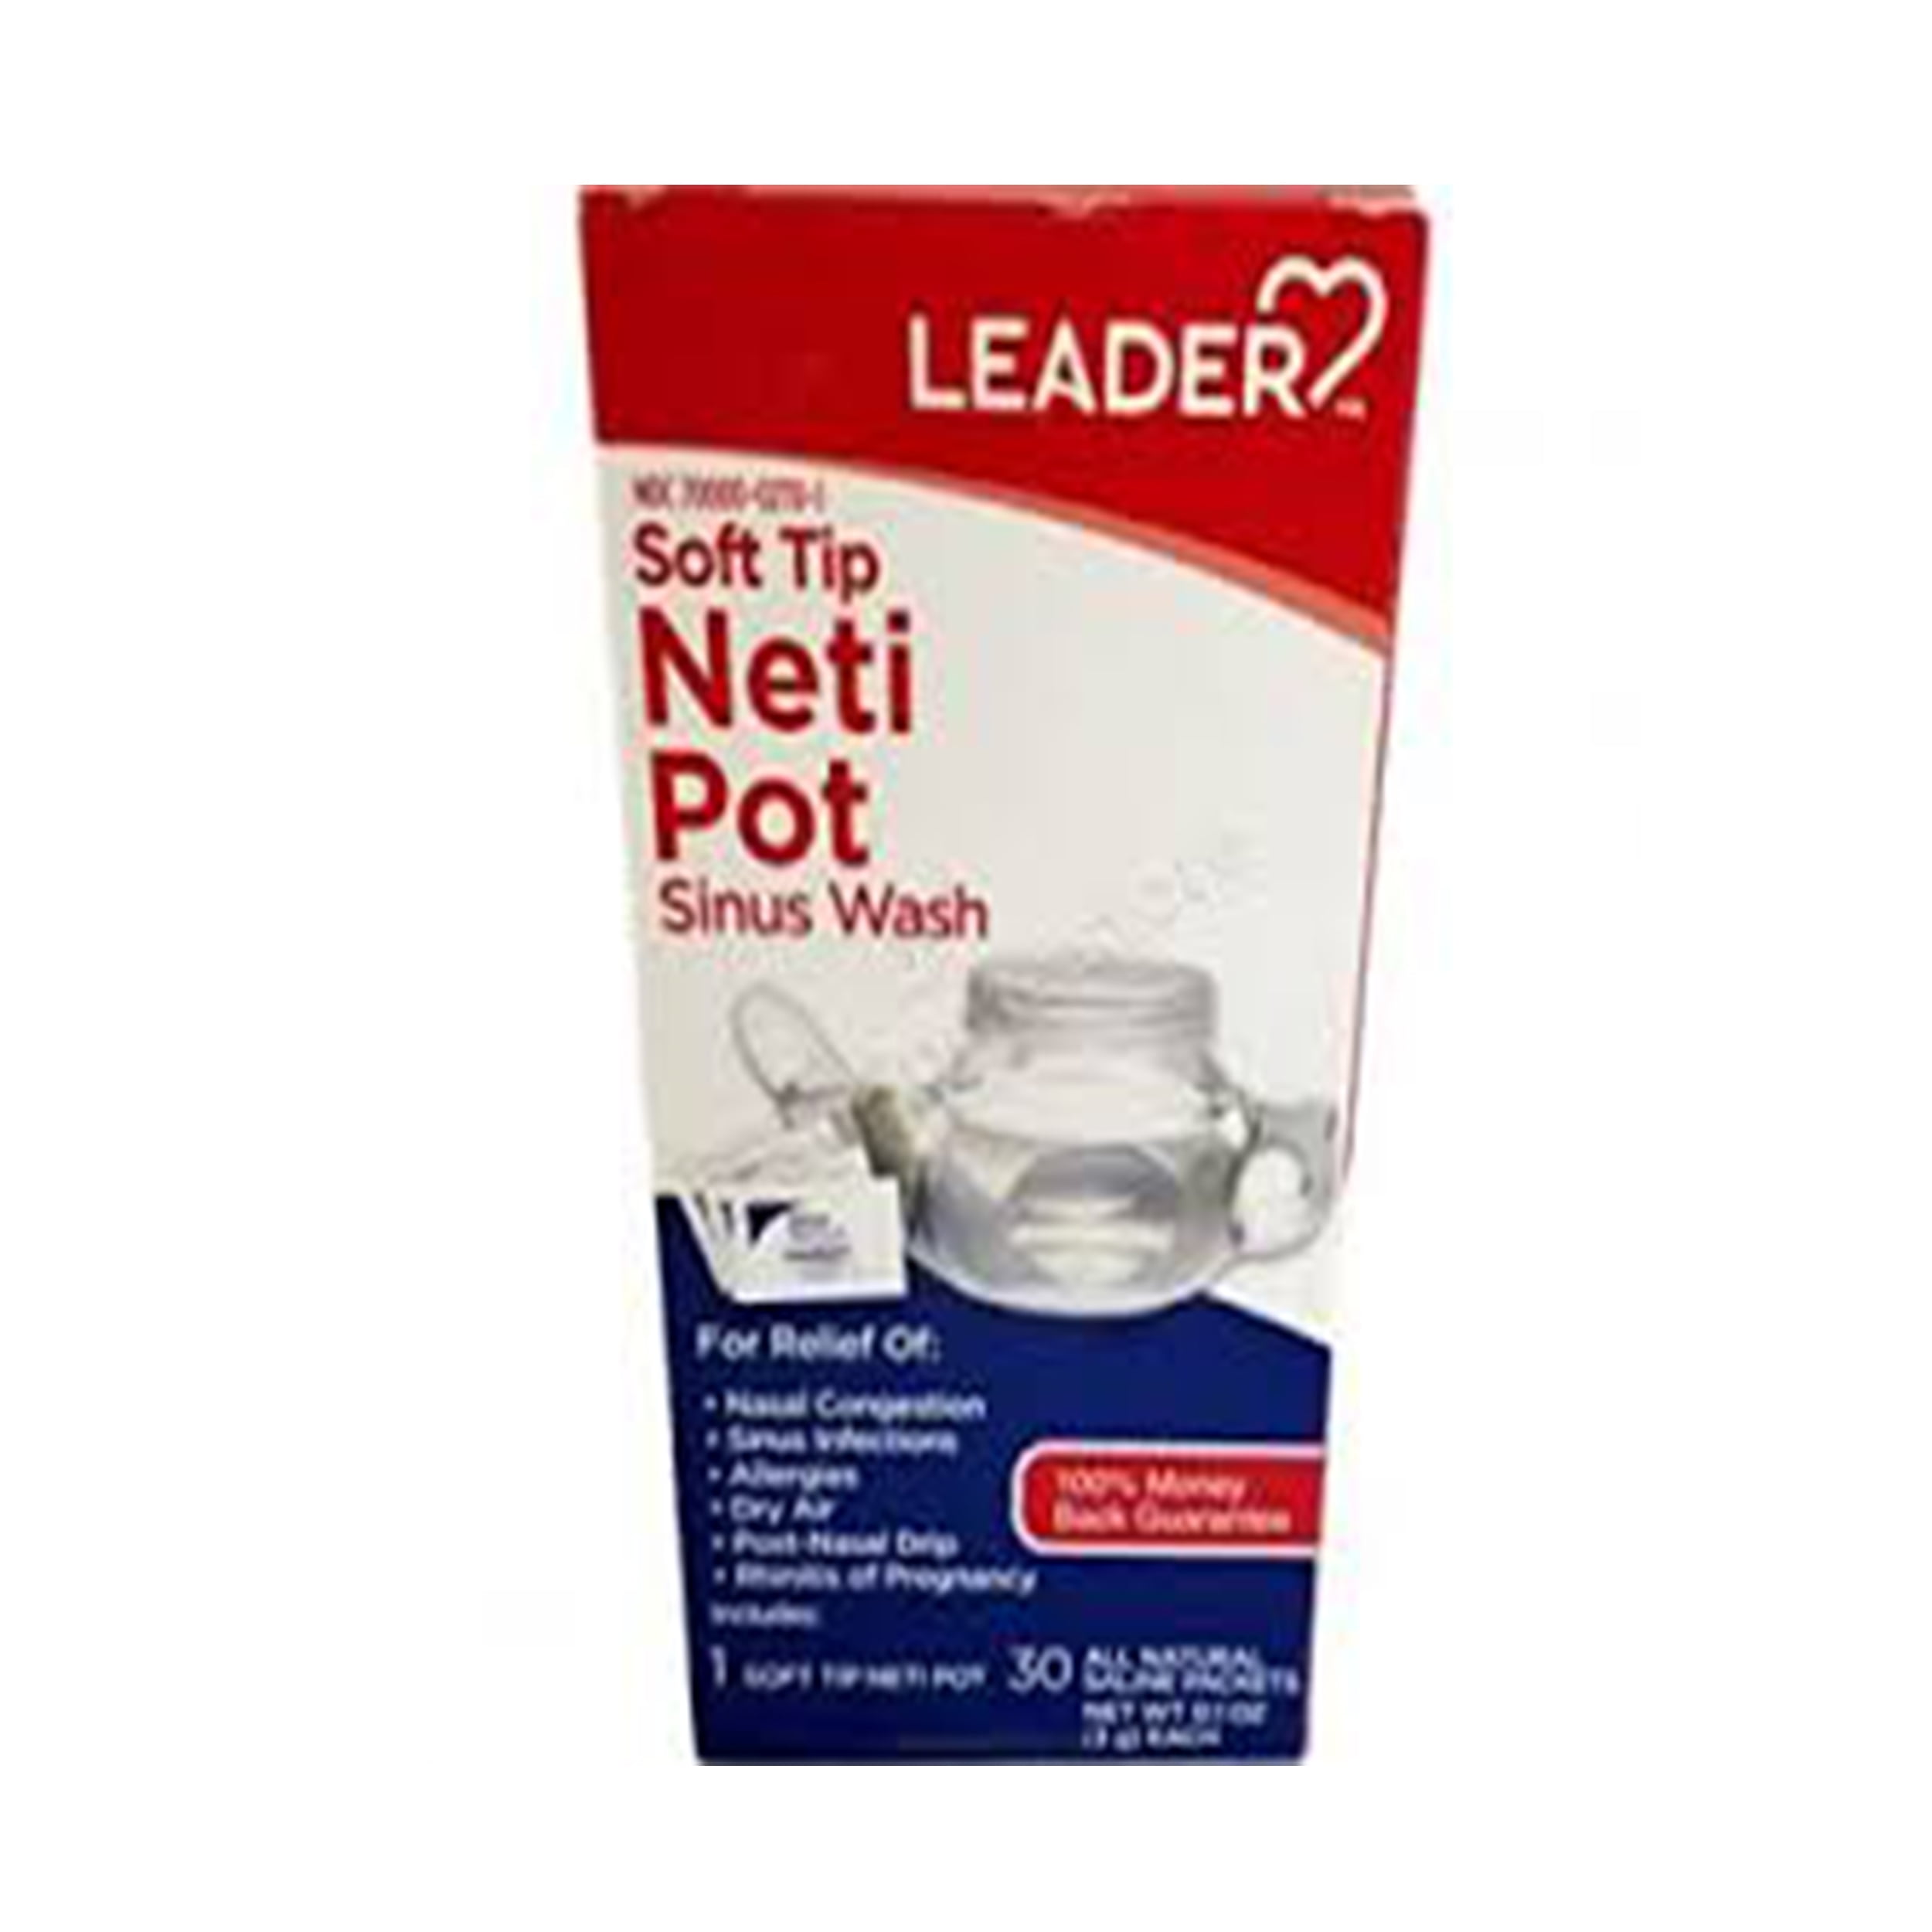 Soft Tip Neti Pot Nasal Wash System